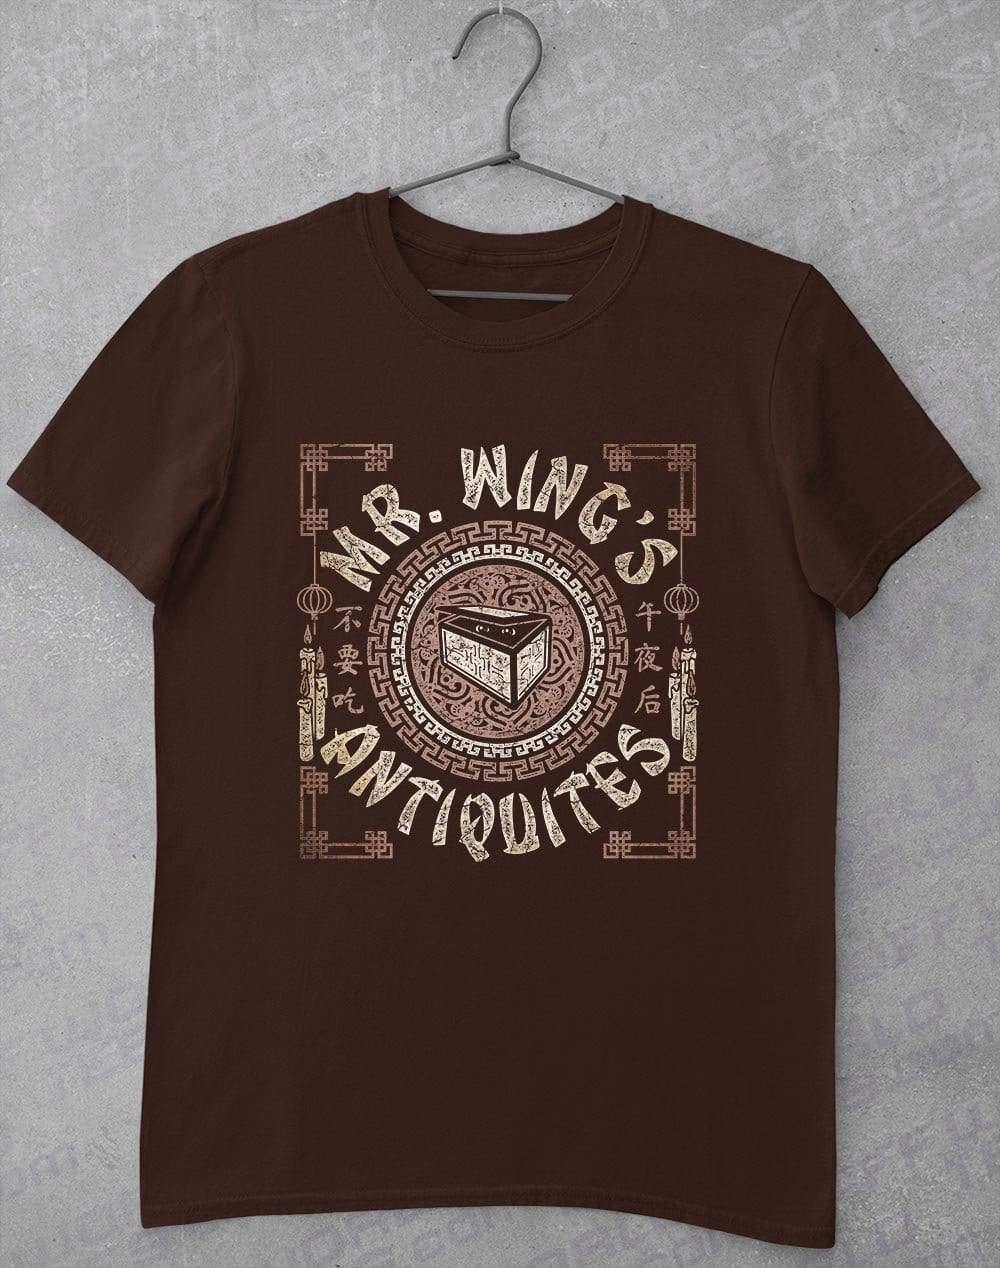 Mr Wing's Antiquites T-Shirt S / Dark Chocolate  - Off World Tees